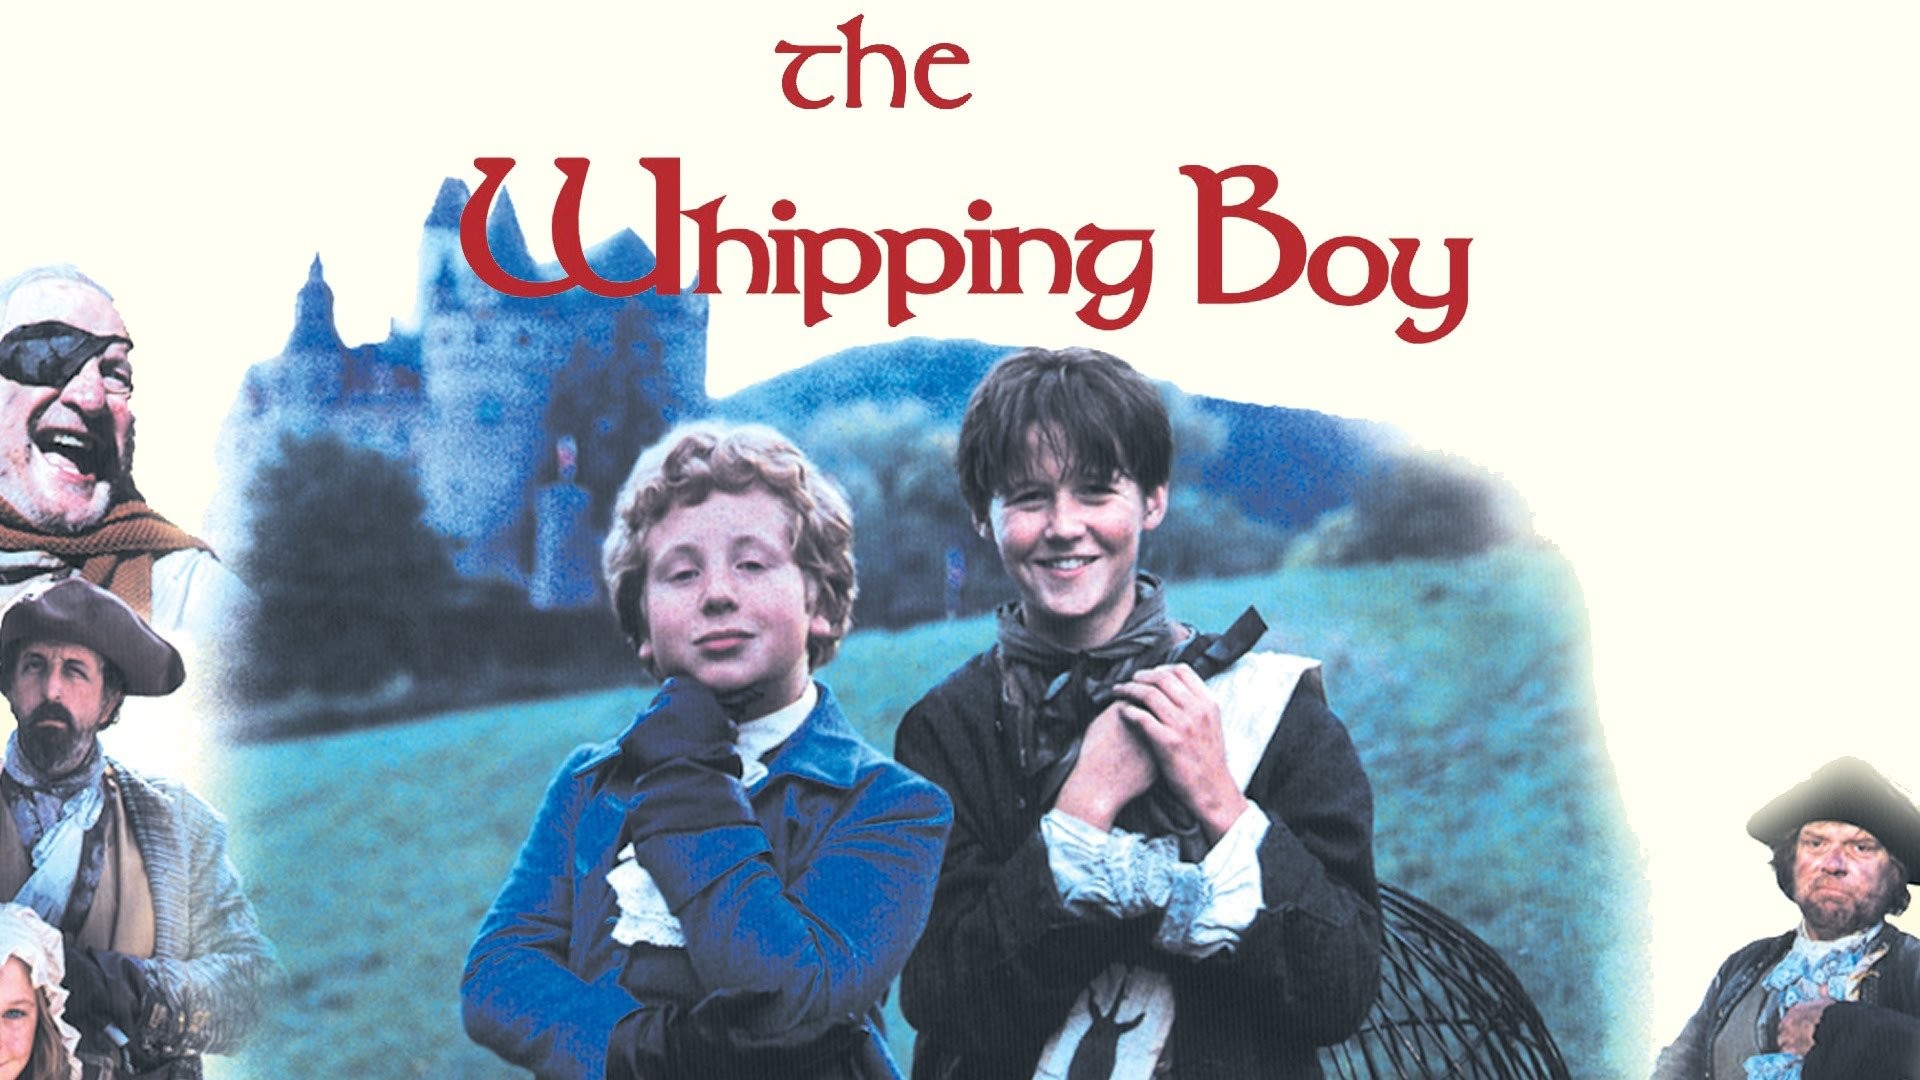 The Whipping Boy (TV Movie 1994) - IMDb